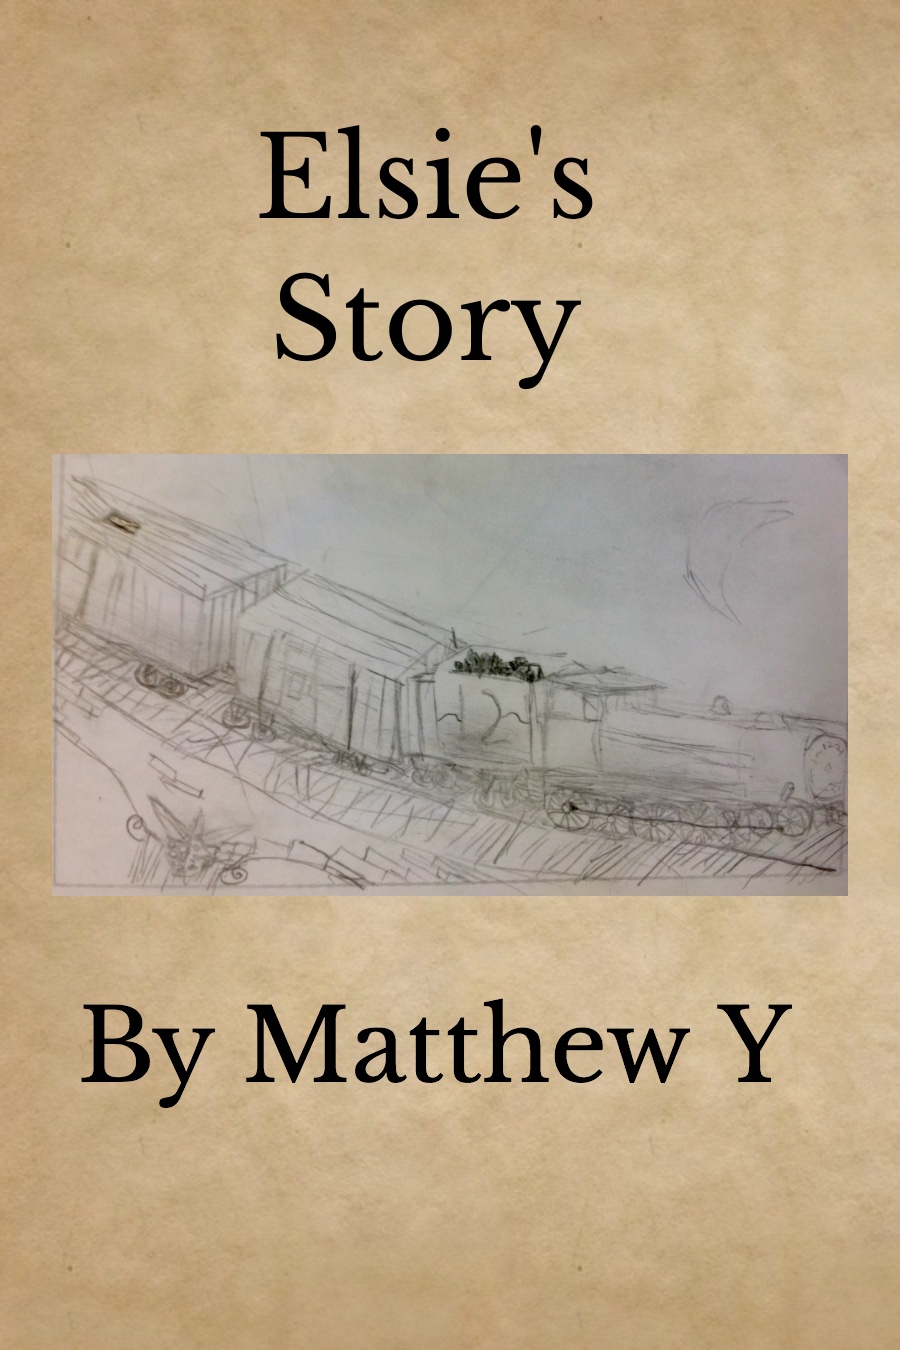 Else’s Story by Matthew Y